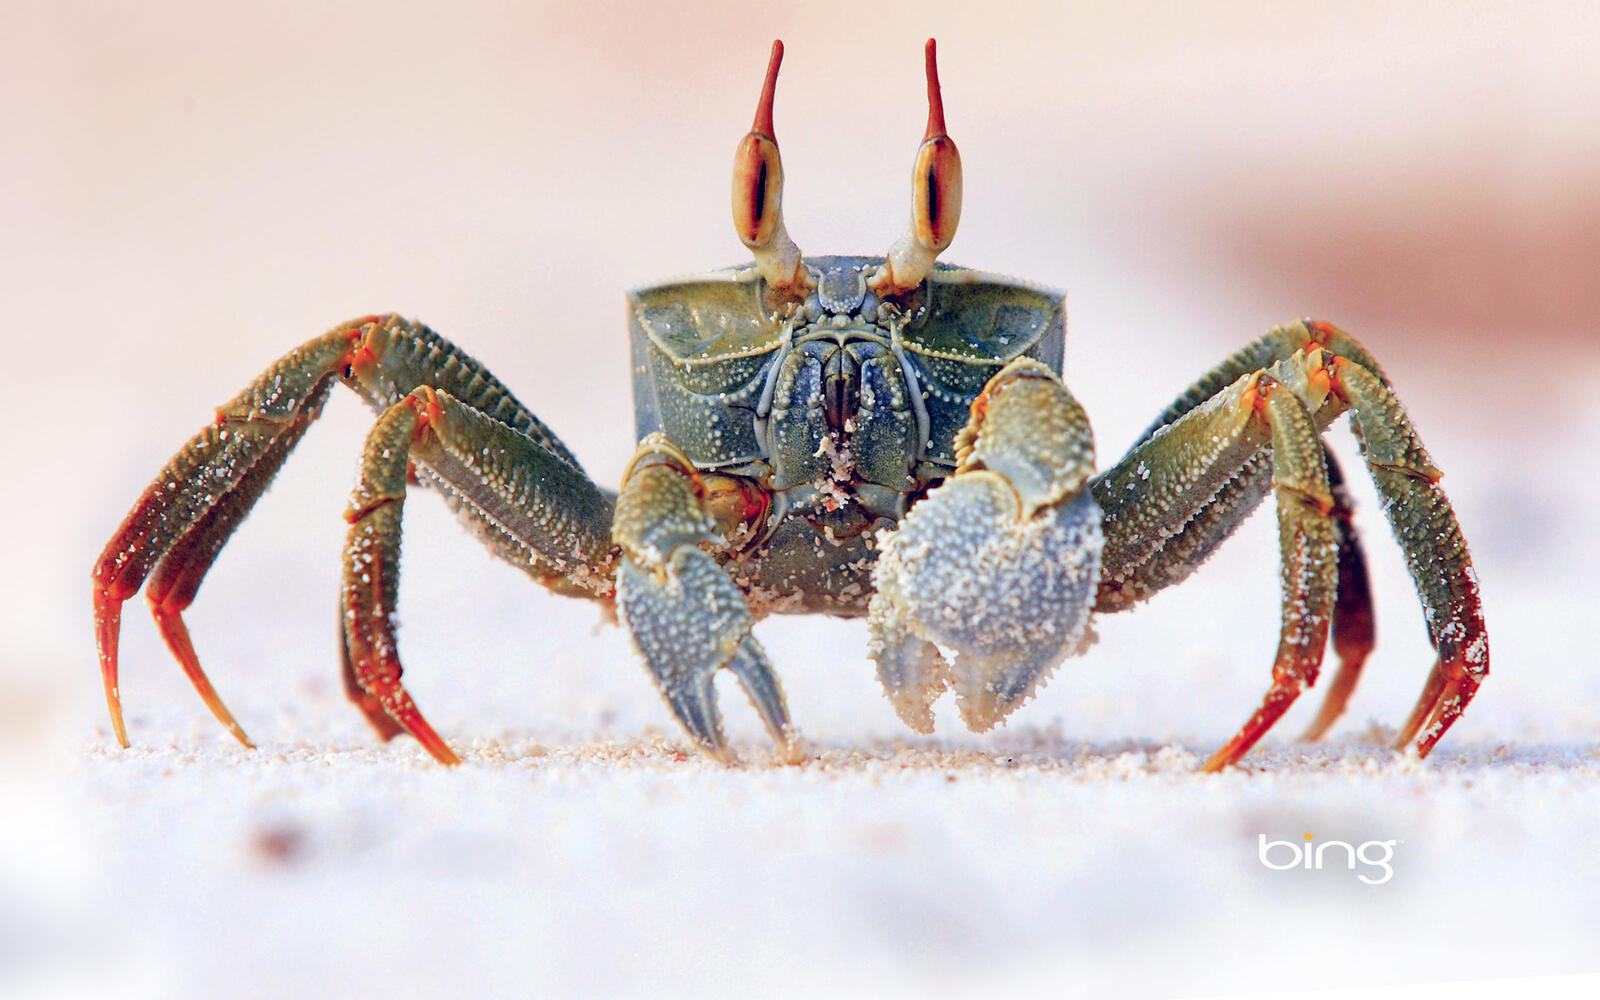 Wallpapers crab Bing nature on the desktop